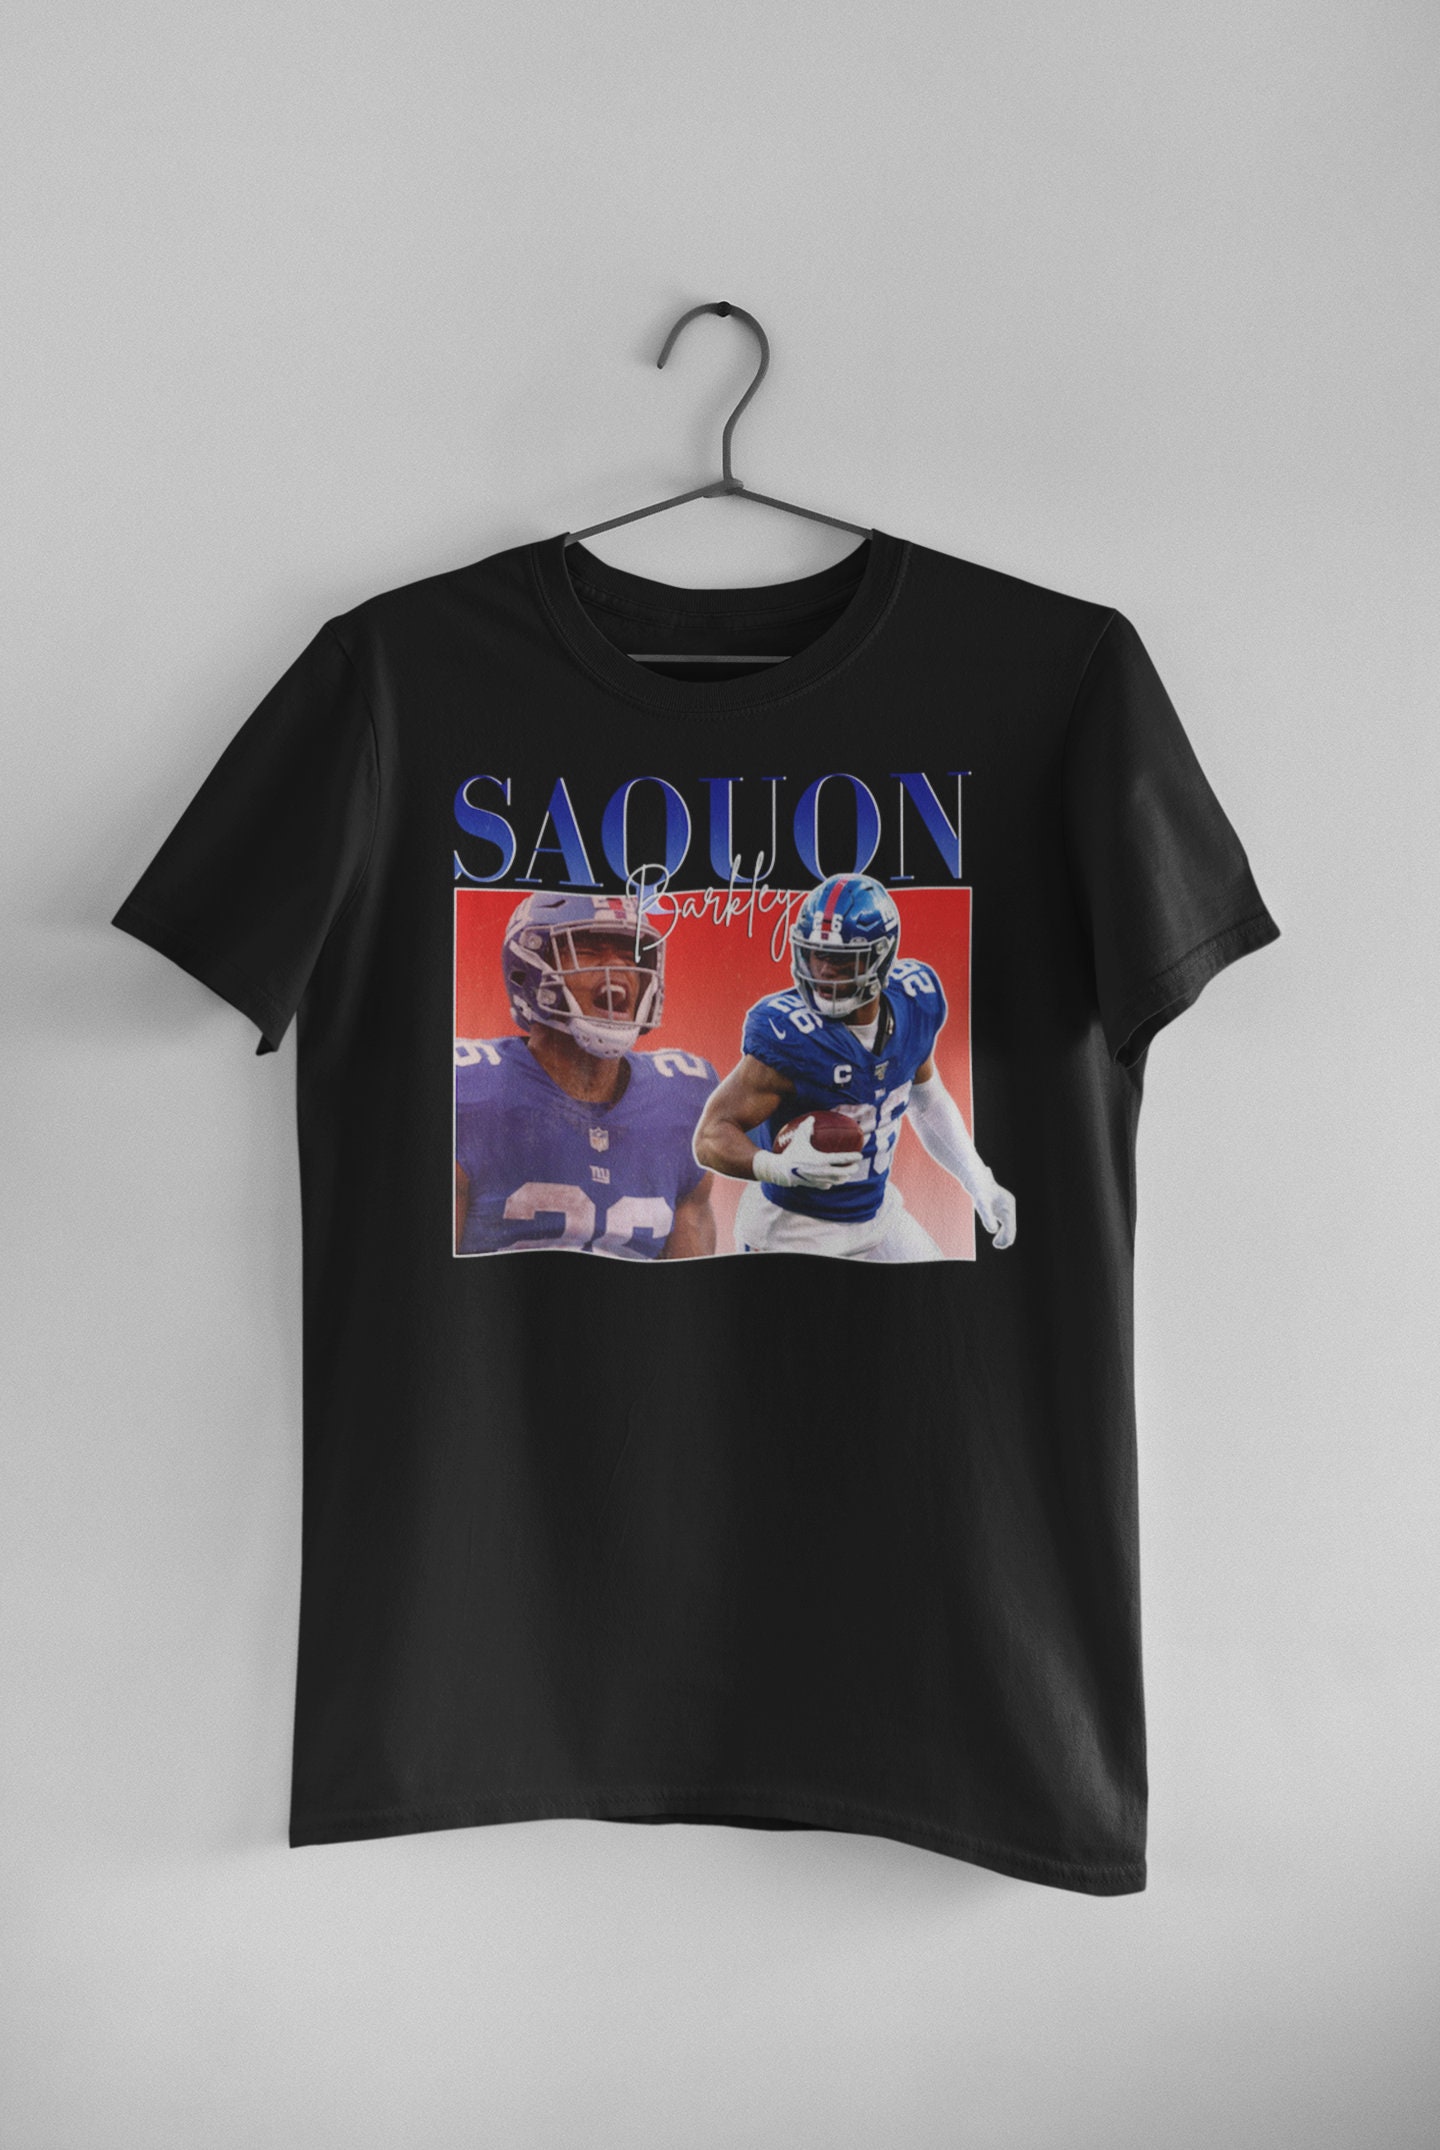 SAQUON BARKLEY - New York Giants